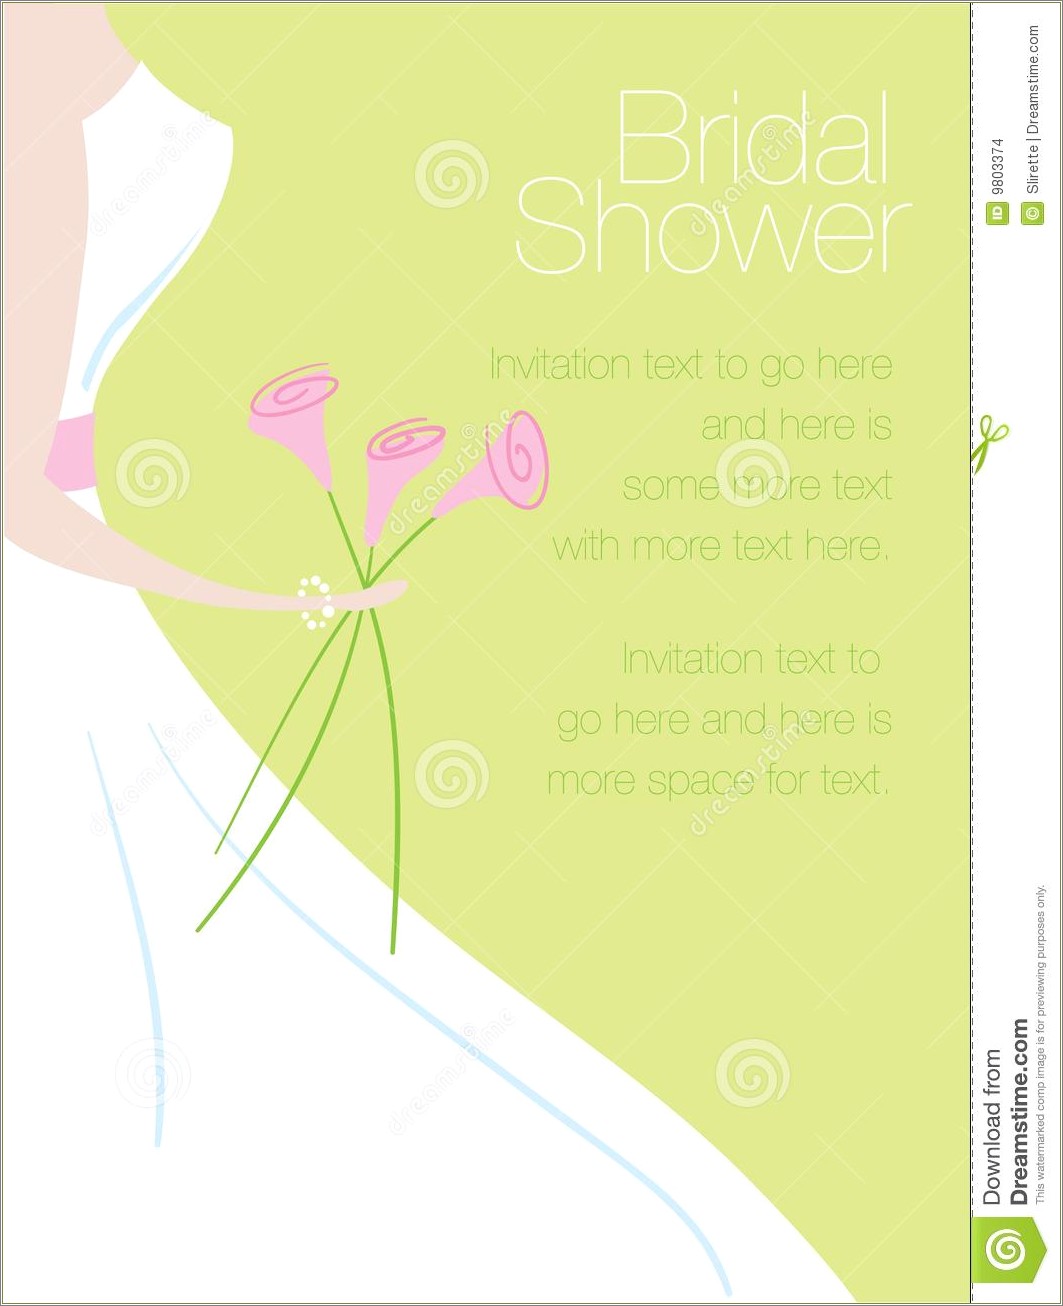 Free Printable Bridal Shower Invitation Templates Download